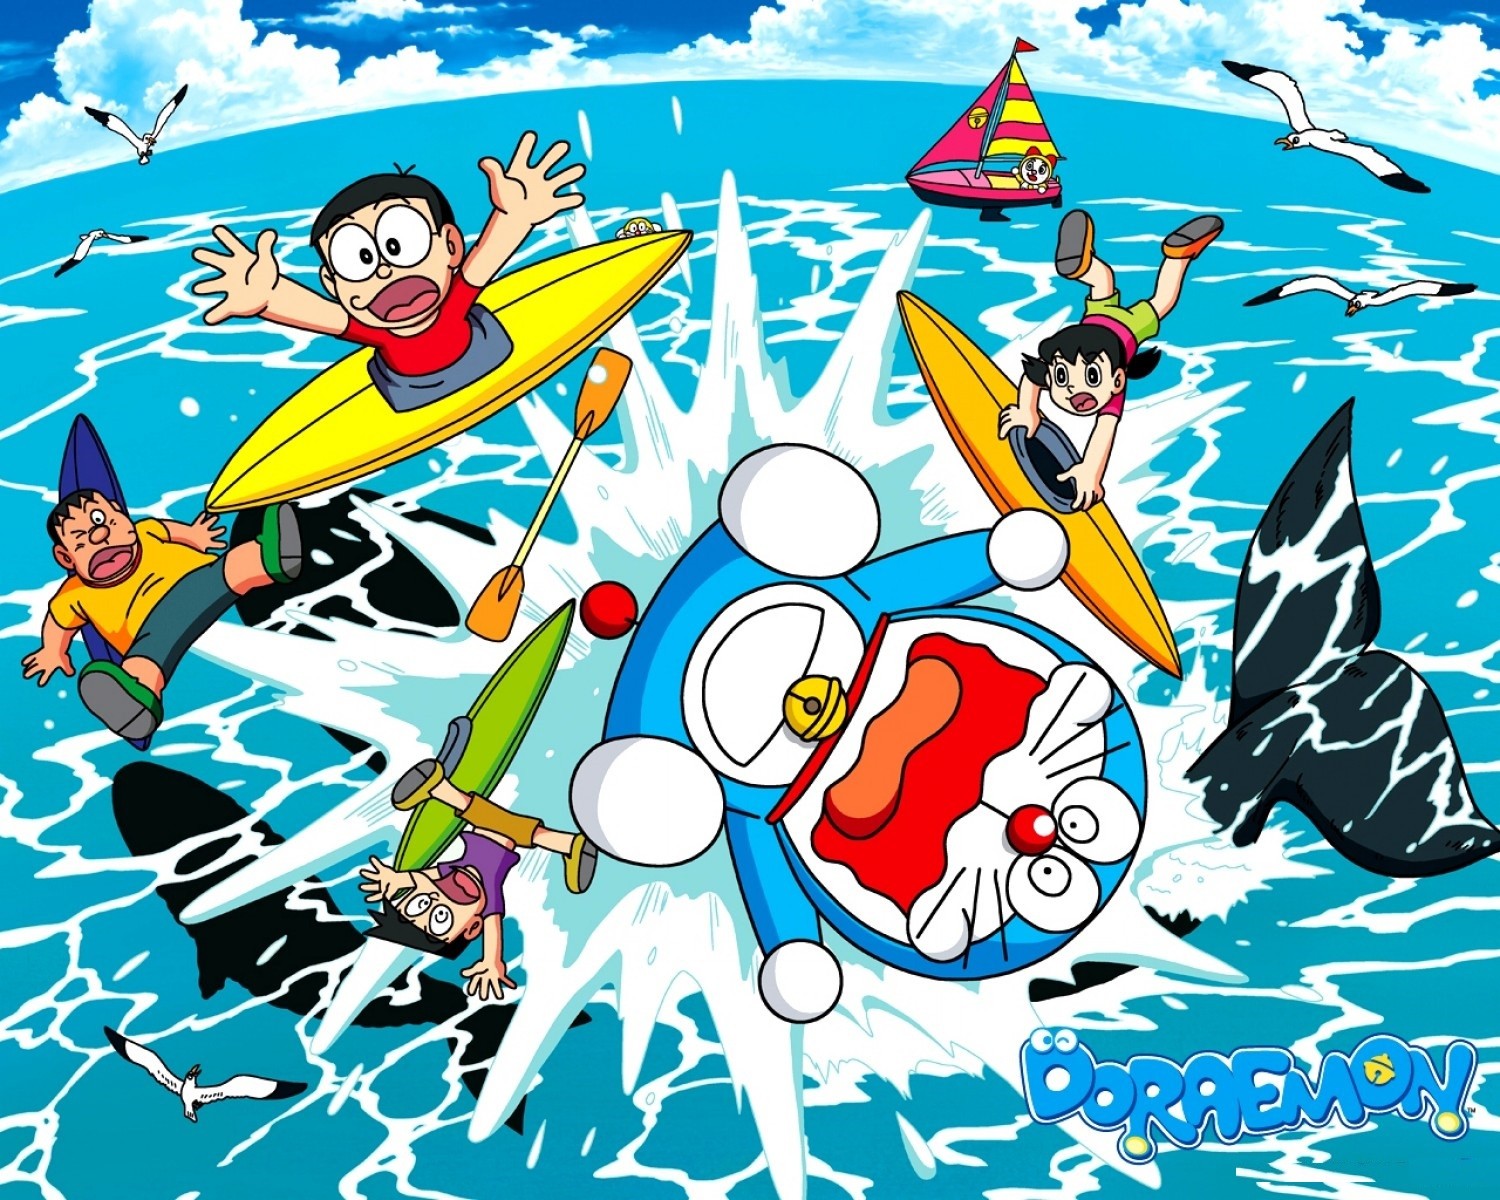 Doraemon Wallpaper Free Download - Doraemon And Friends Wallpaper 2015 , HD Wallpaper & Backgrounds